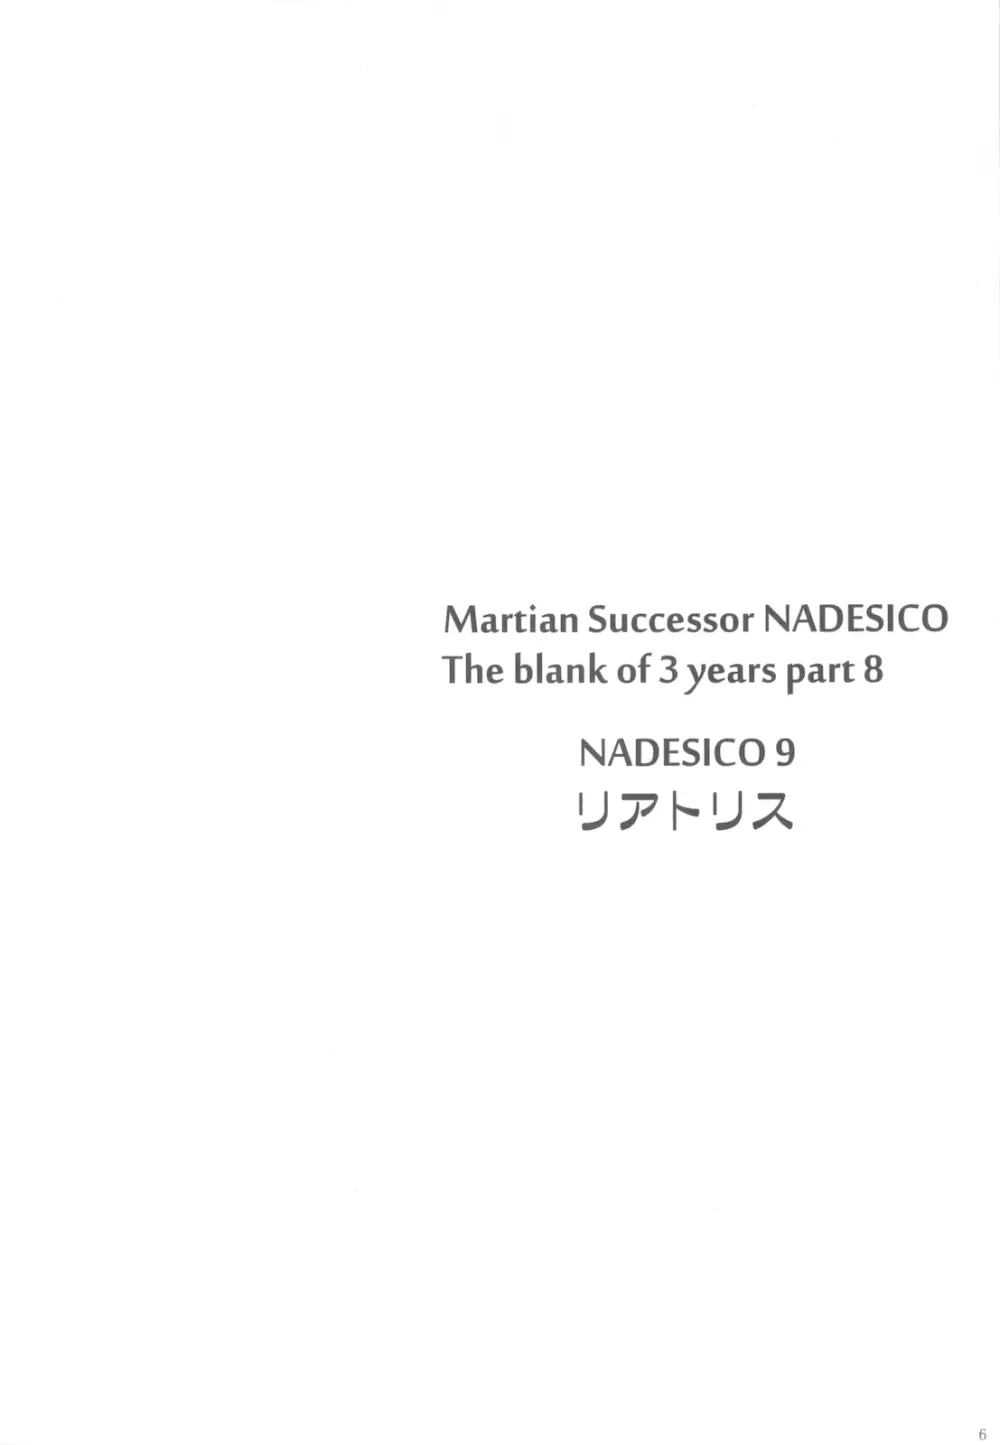 NADESICO 9 リアトリス 6ページ